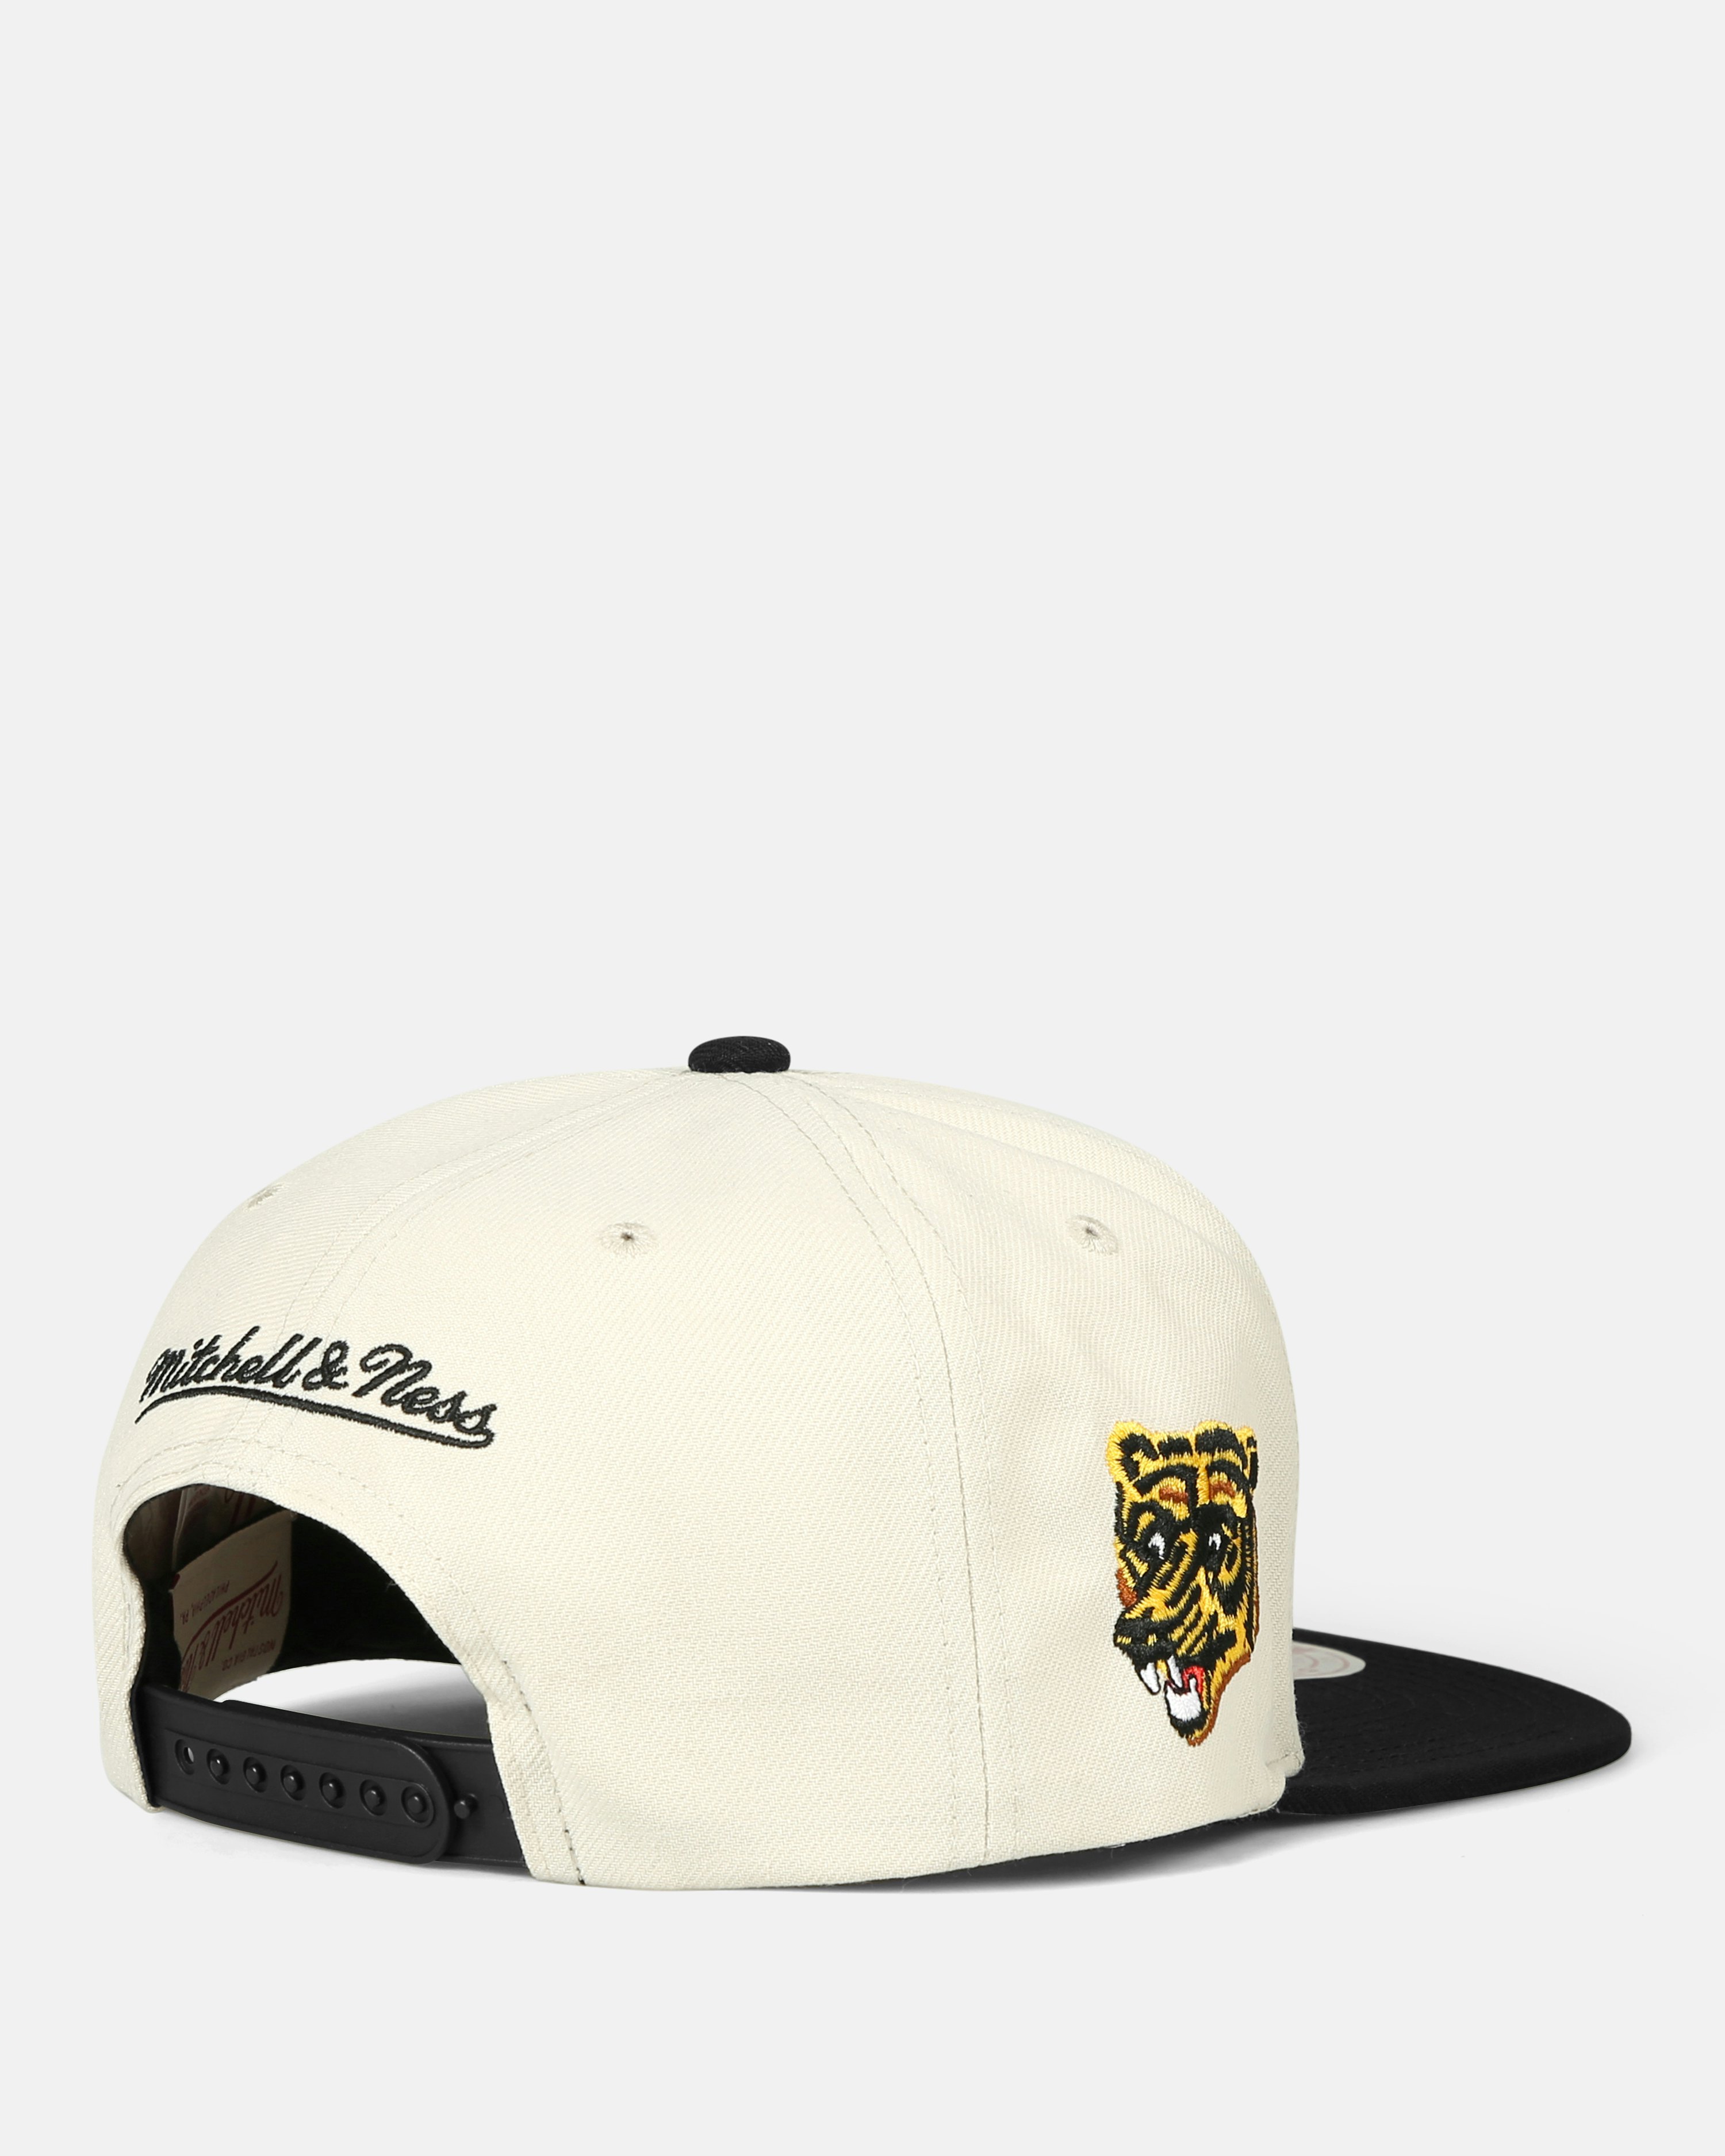 Mitchell & Ness Boston Bruins Retrodome Snapback Hat